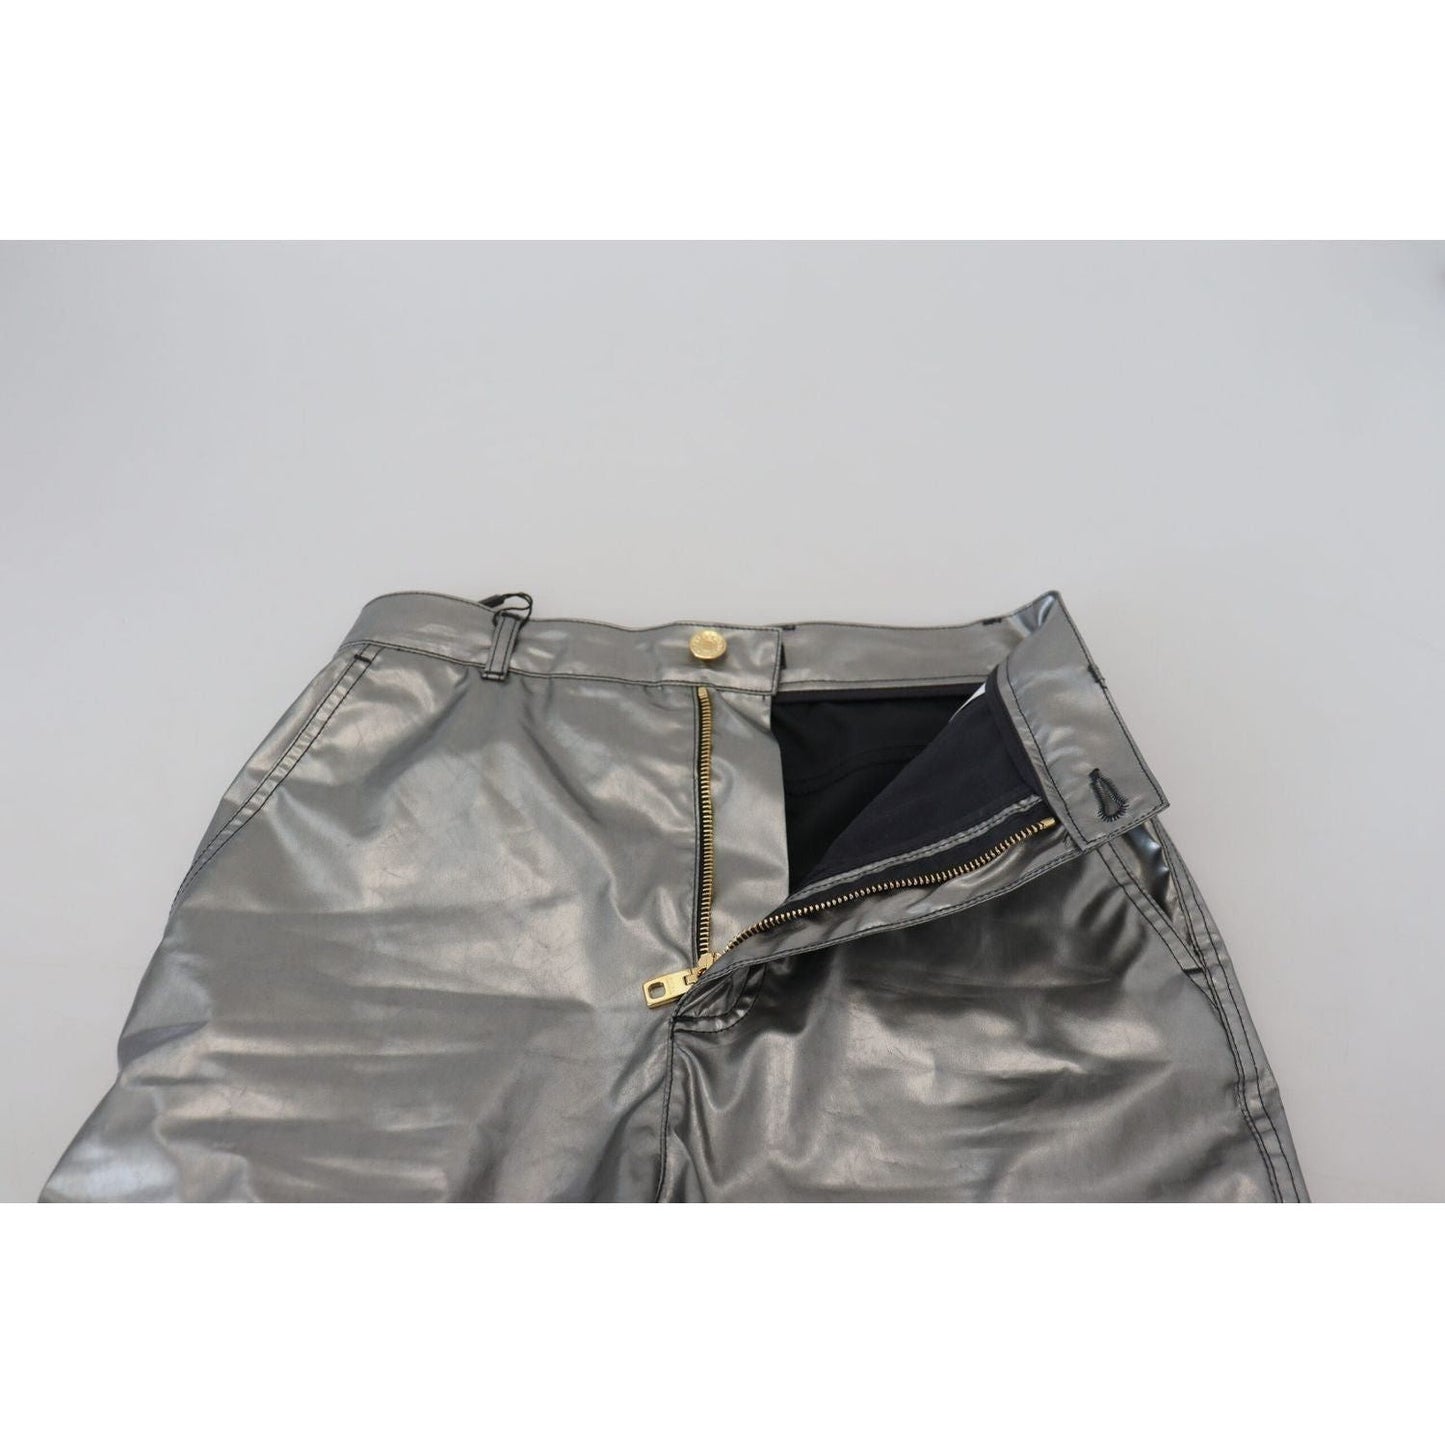 Dolce & Gabbana Elegant High Waist Skinny Pants in Silver metallic-silver-high-waist-skinny-pants IMG_2390-scaled-51894194-5de.jpg